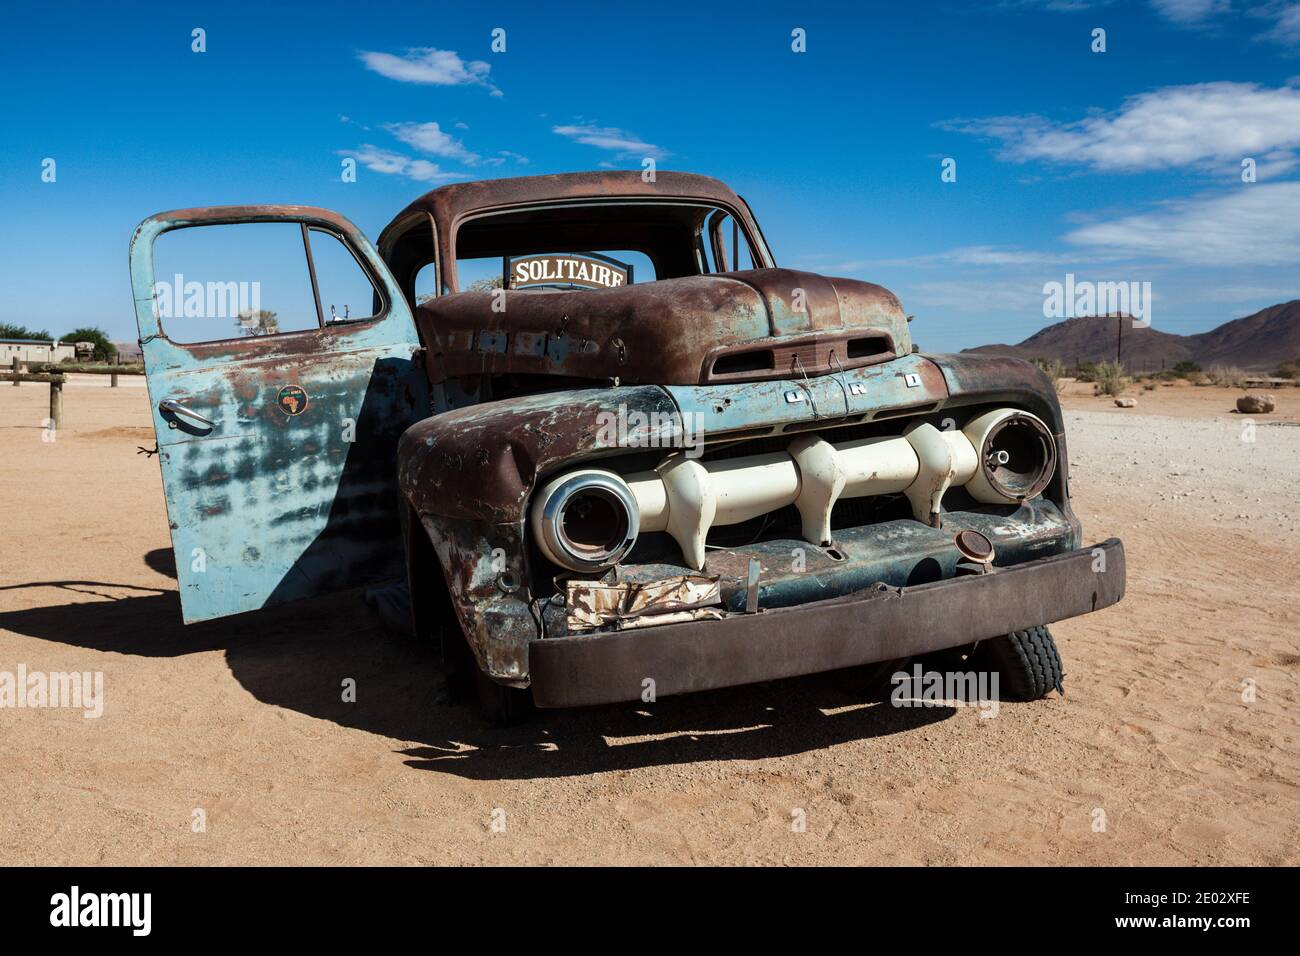 Car Wreck at Solitaire, Namib Naukluft Park, Namibia Foto de stock